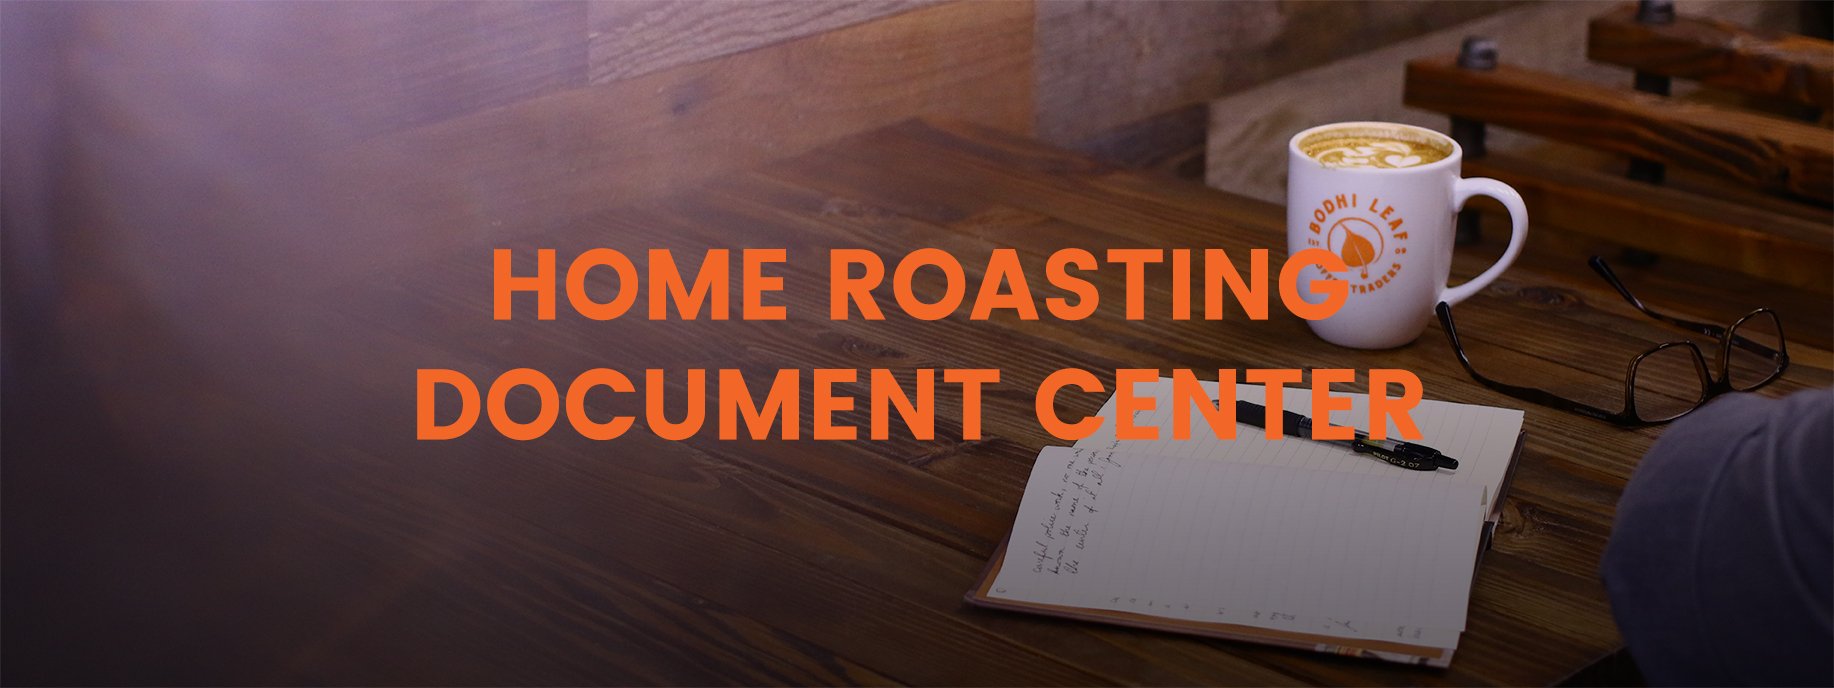 Home Roasting Document Center